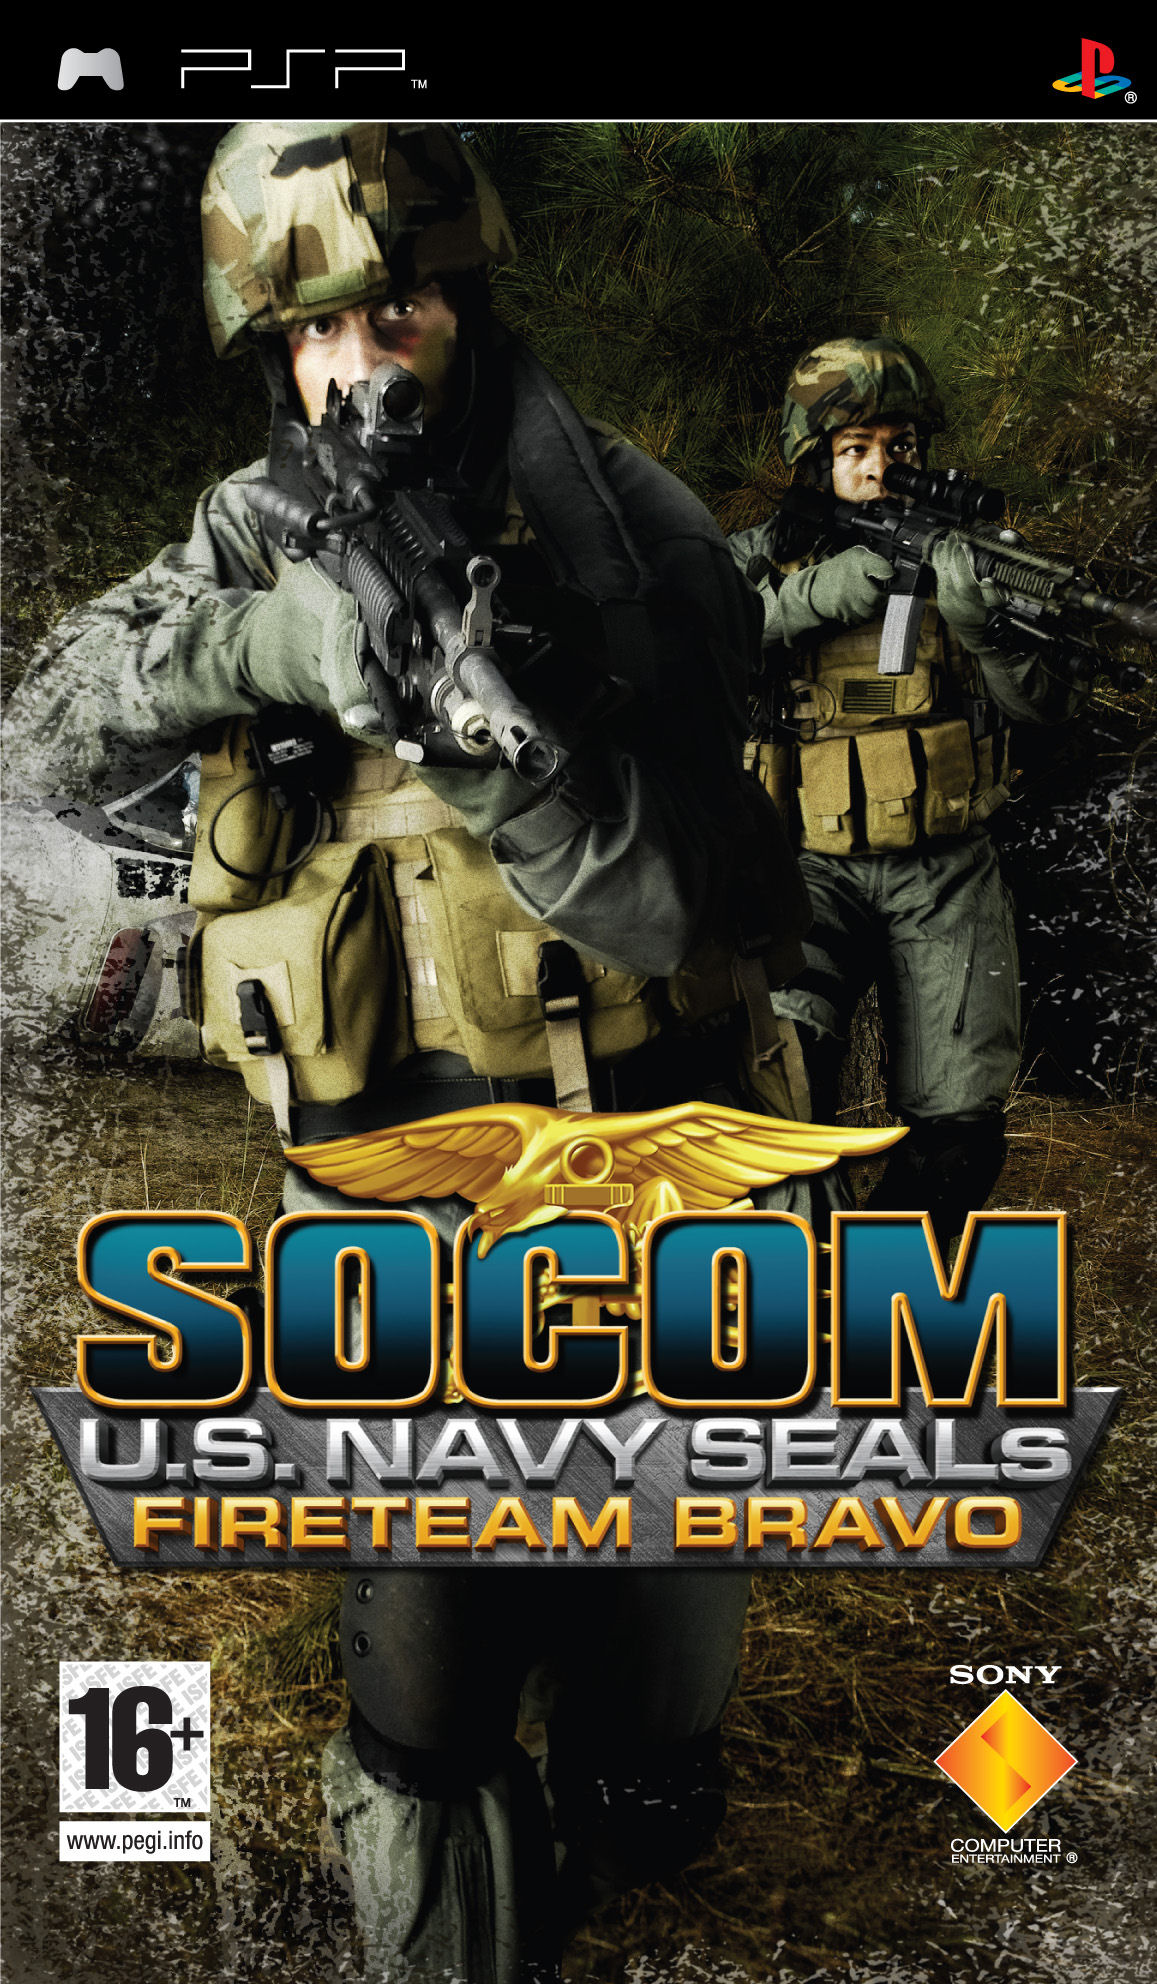 SOCOM U.S. Navy SEALs: Fireteam Bravo on Sony PSP - Depop